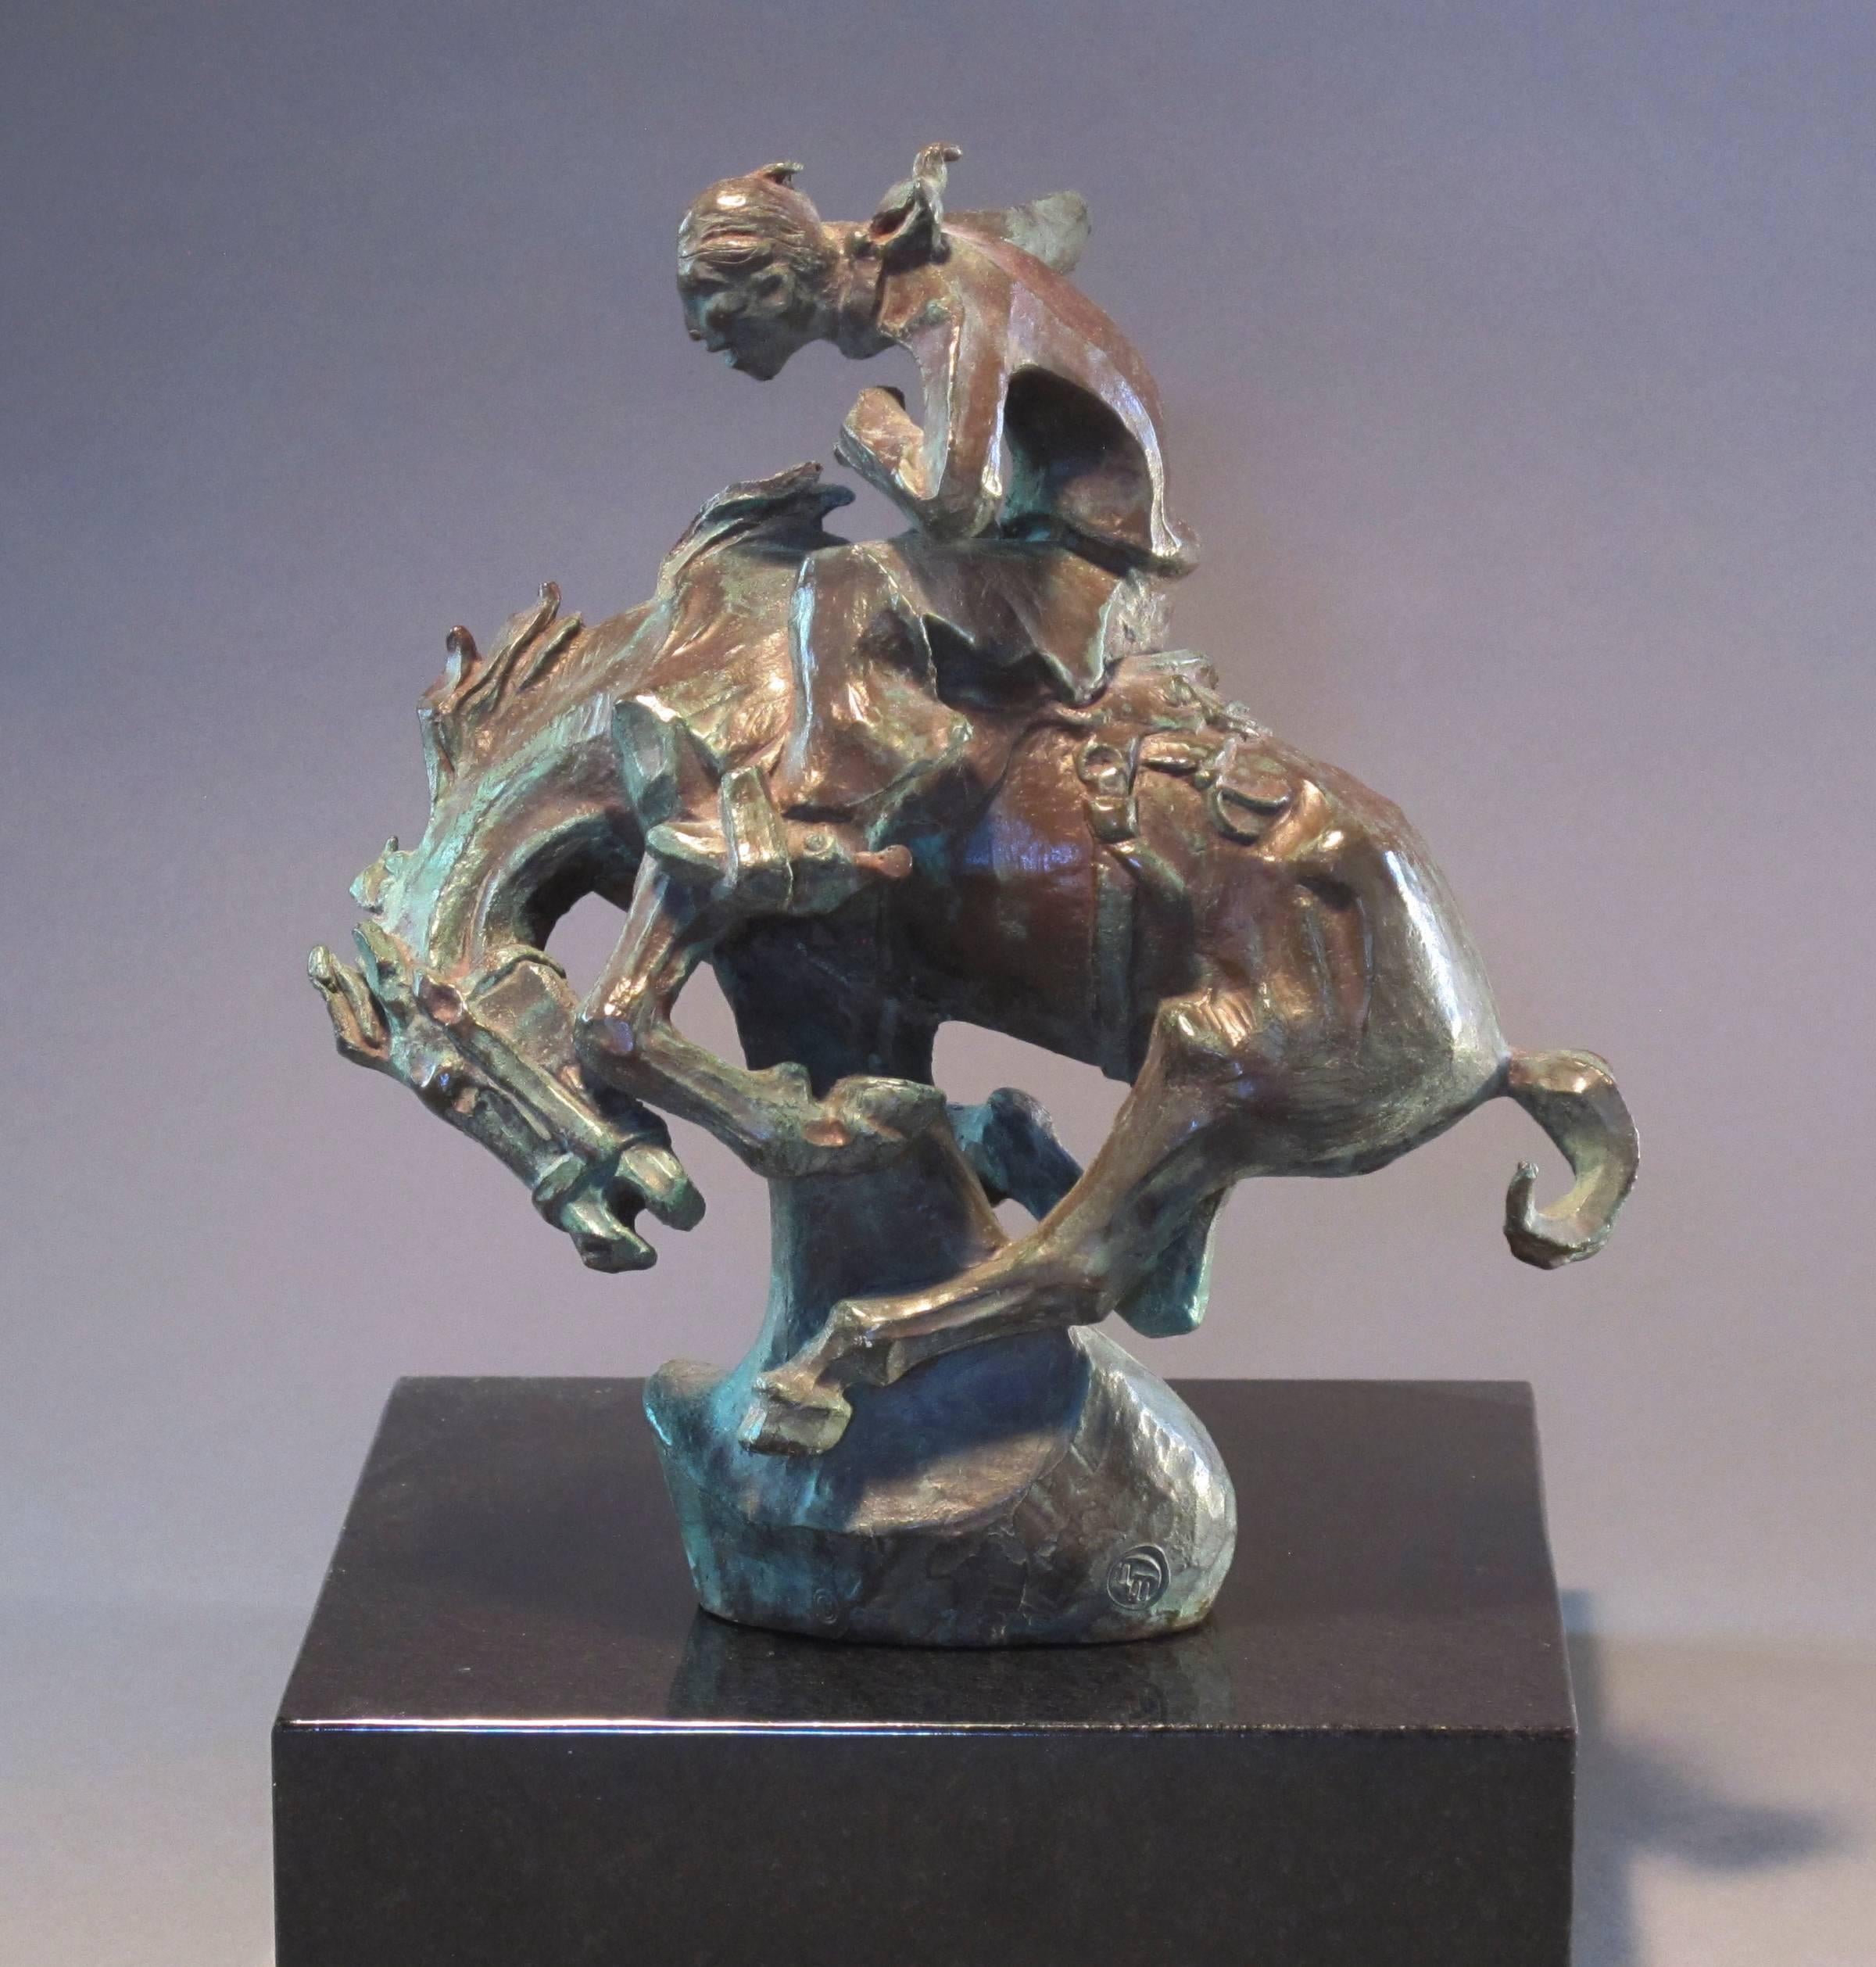 Cowboy Bronco Rider - Sculpture by Allan Houser